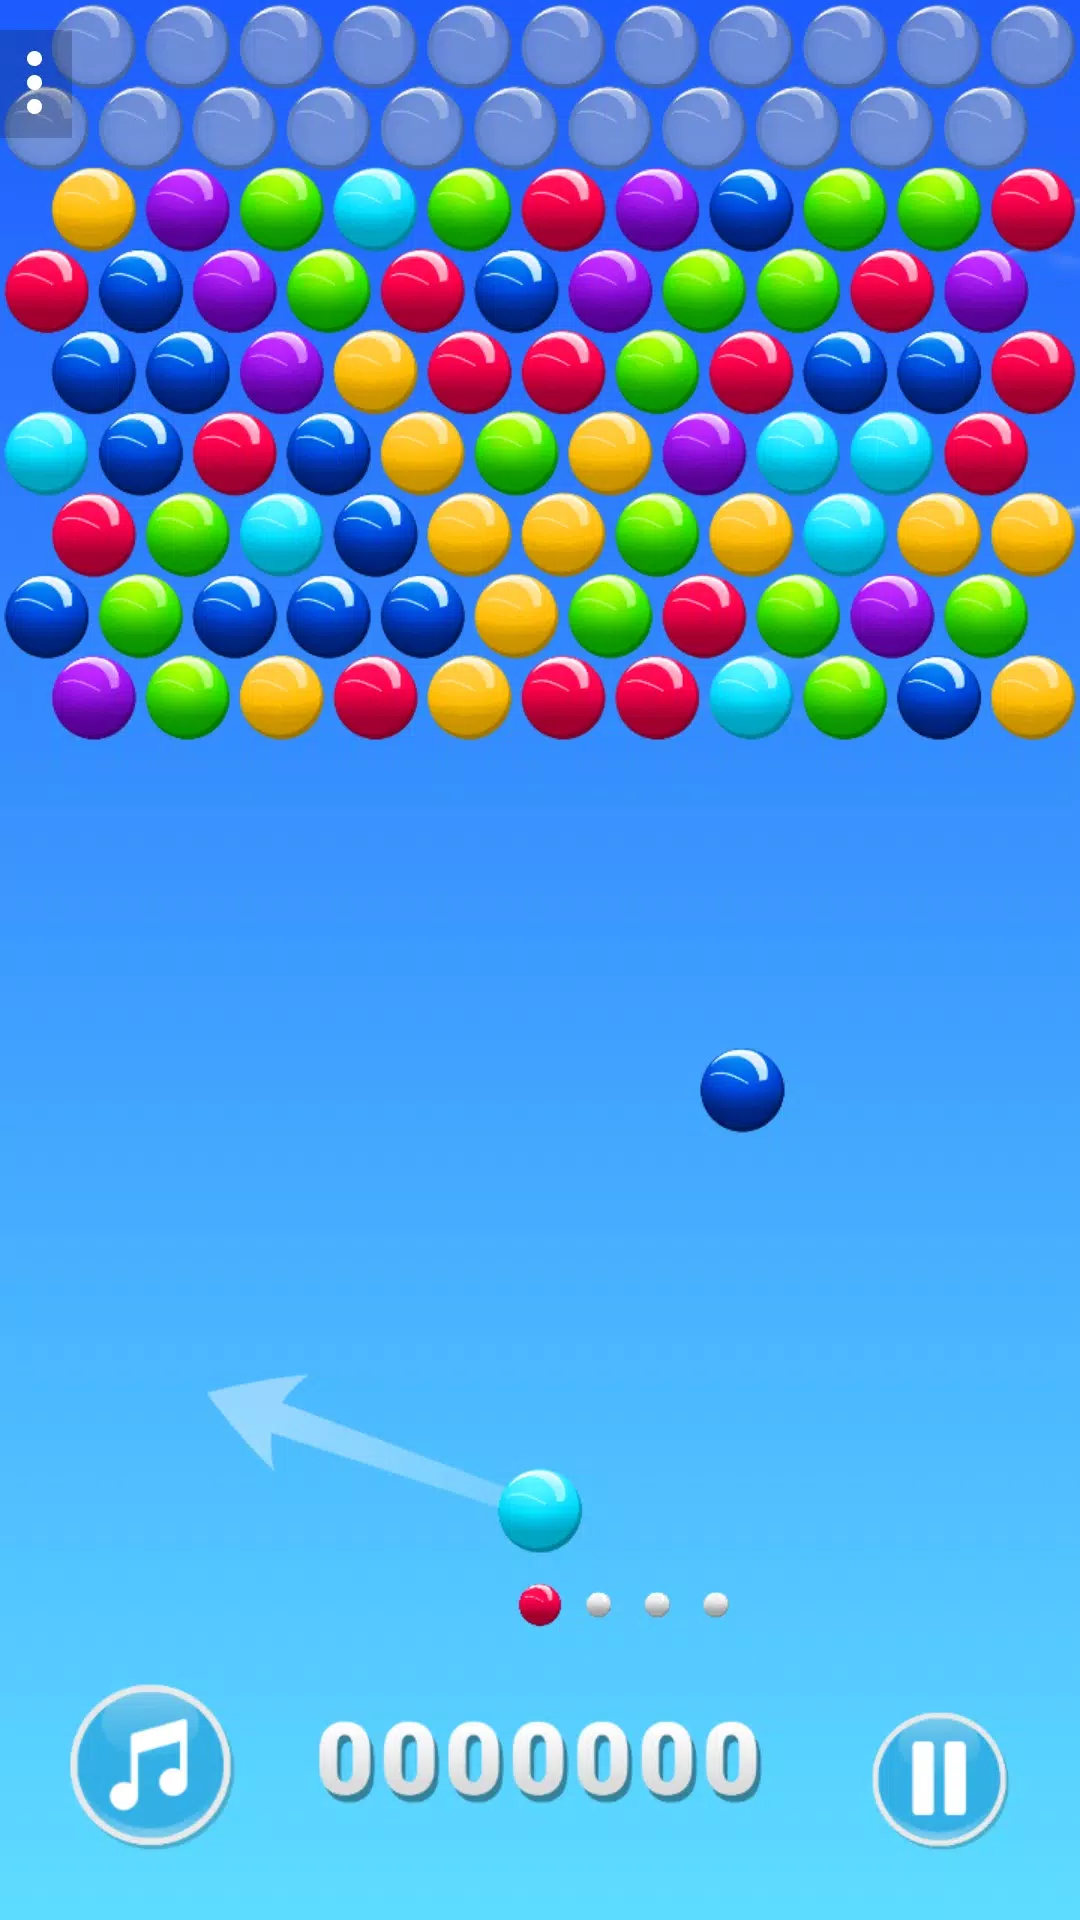 Download do APK de Smarty Bubbles para Android